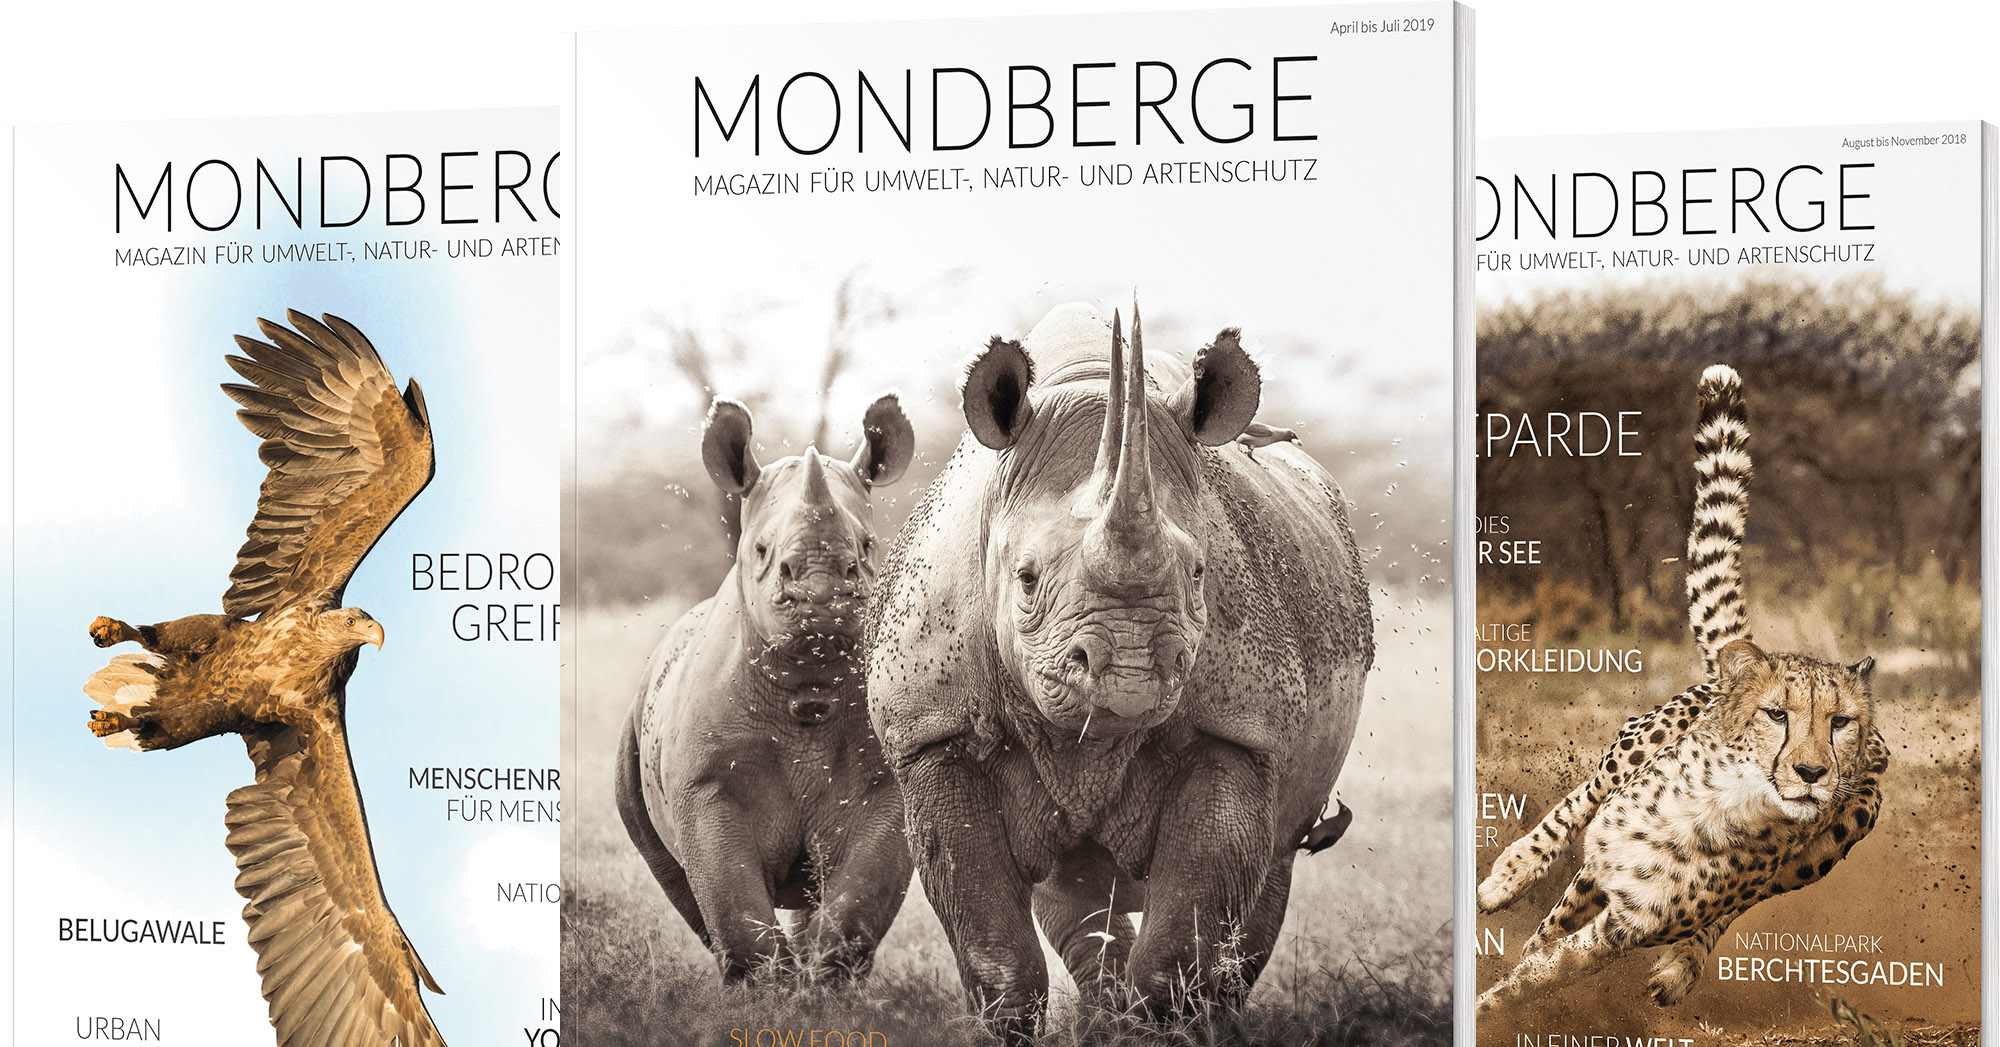 Mondberge – Magazin